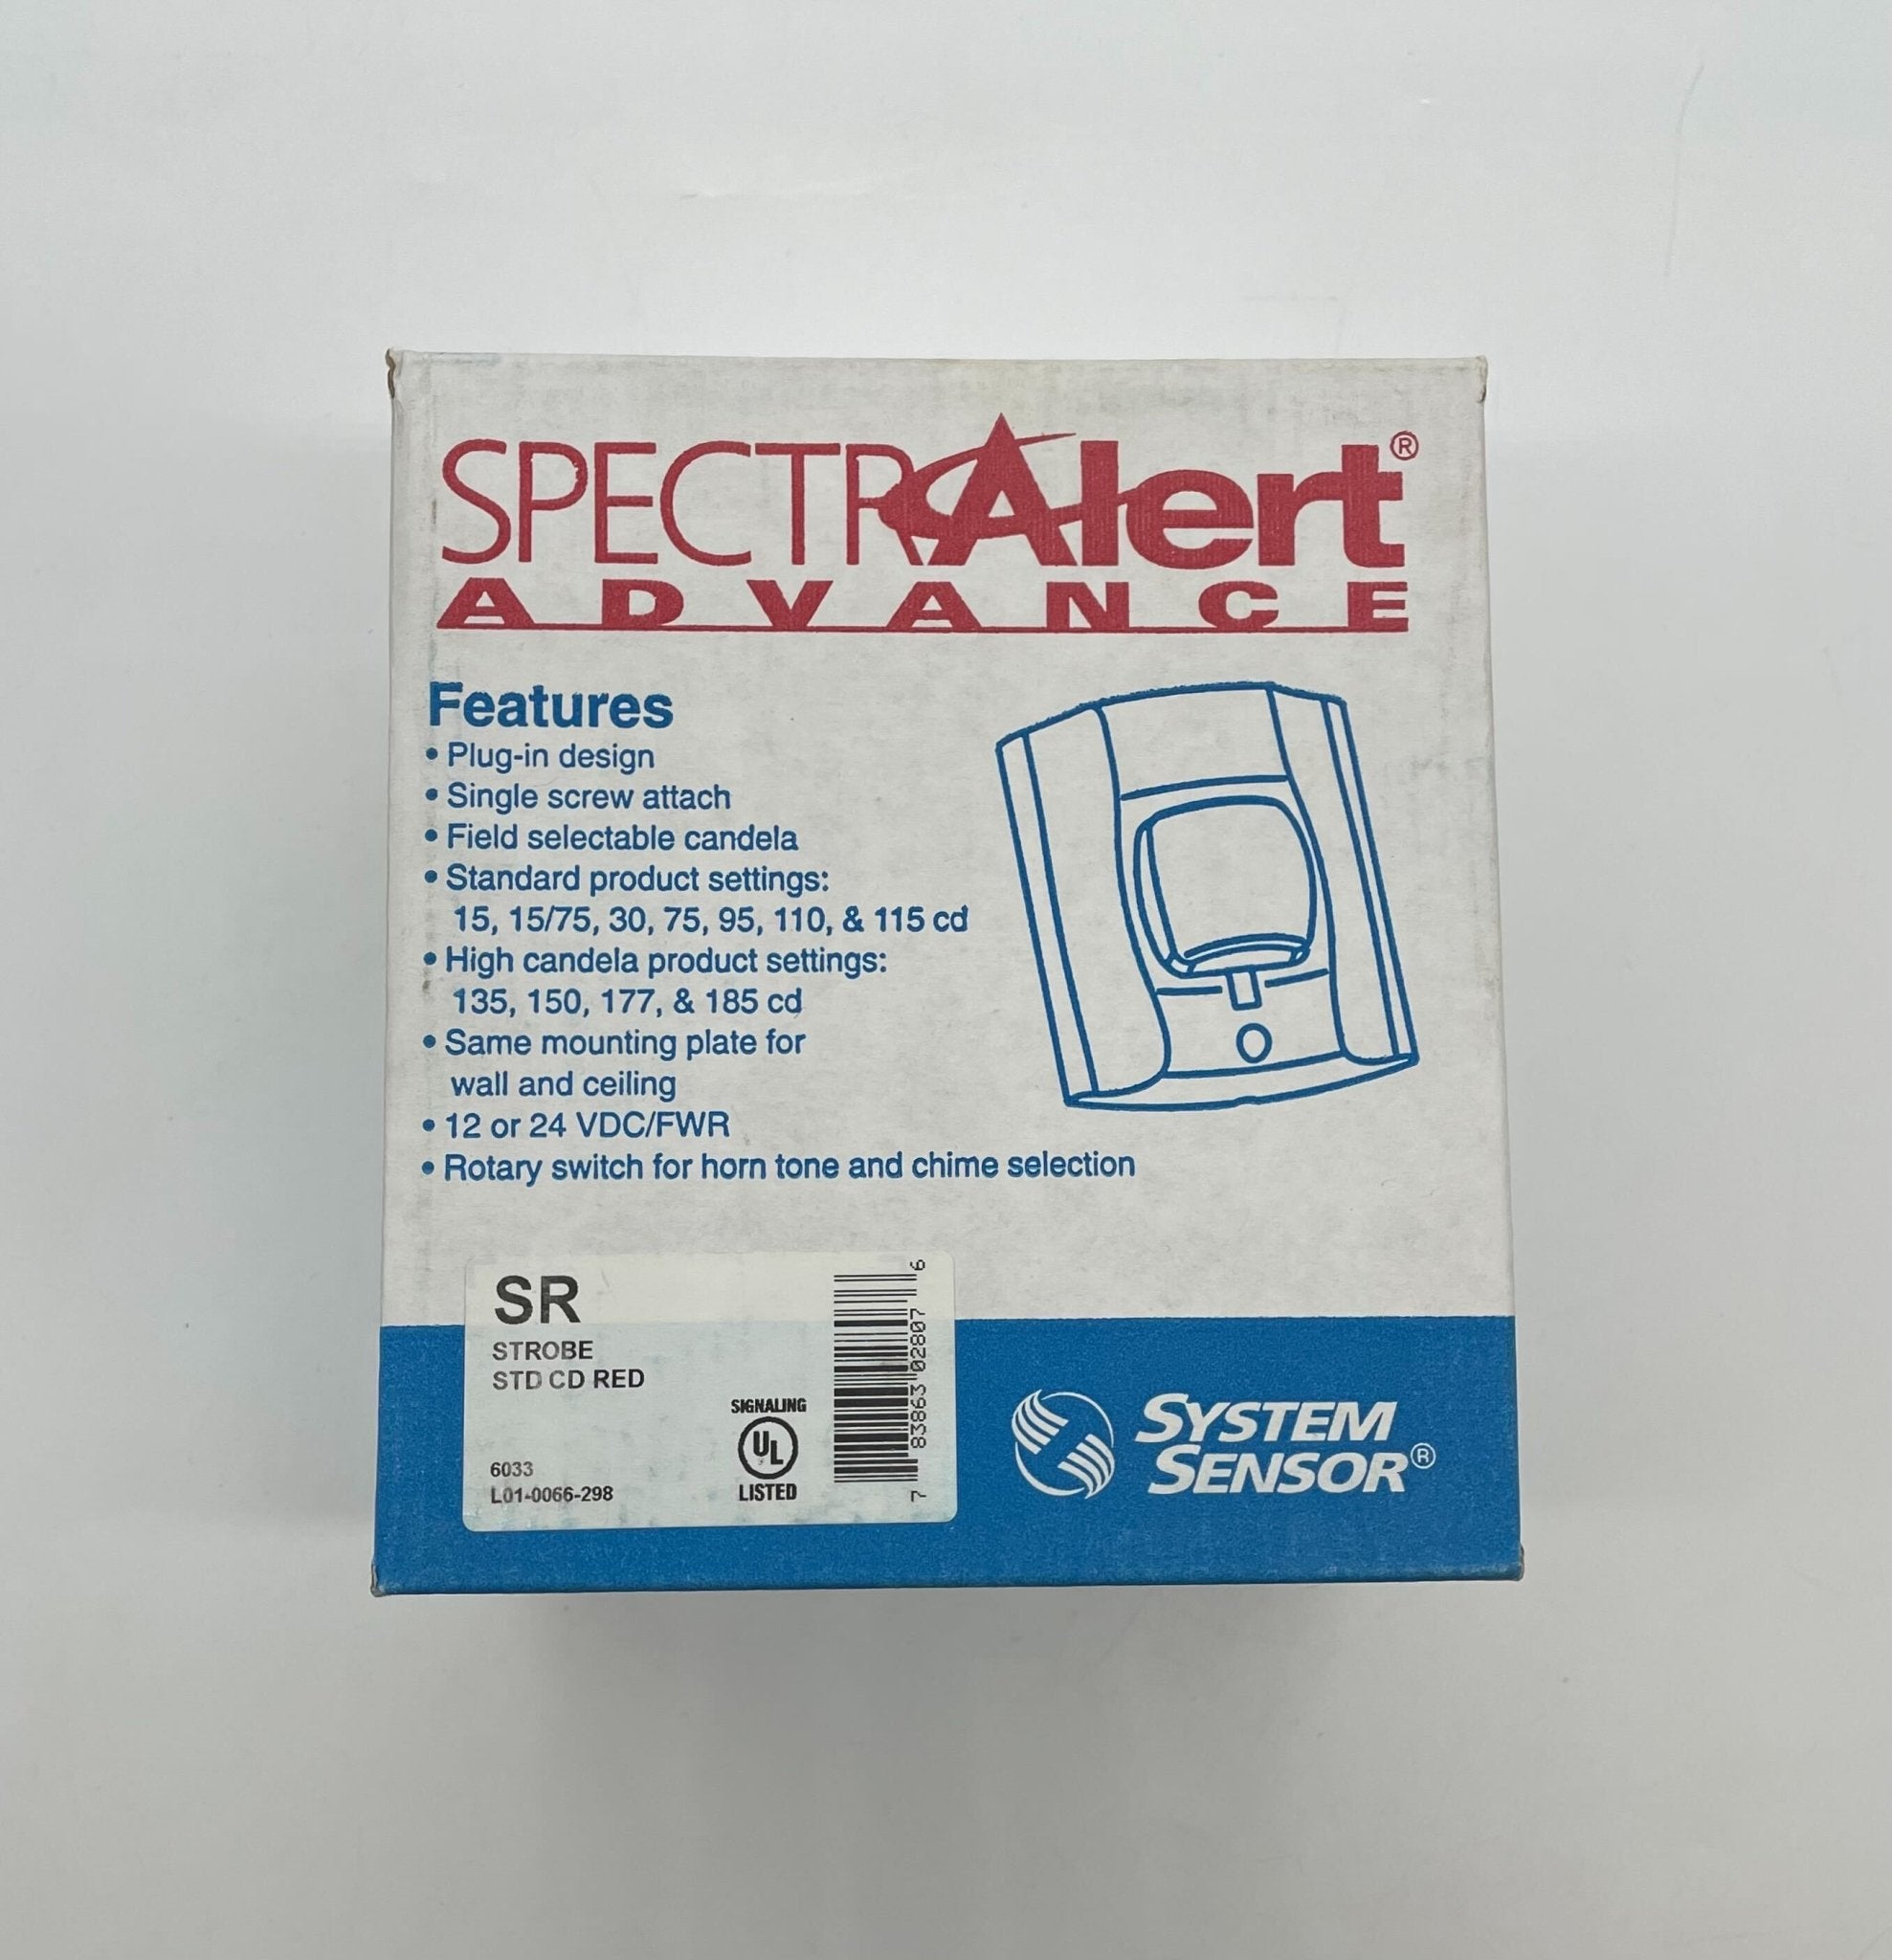 System Sensor SR - The Fire Alarm Supplier